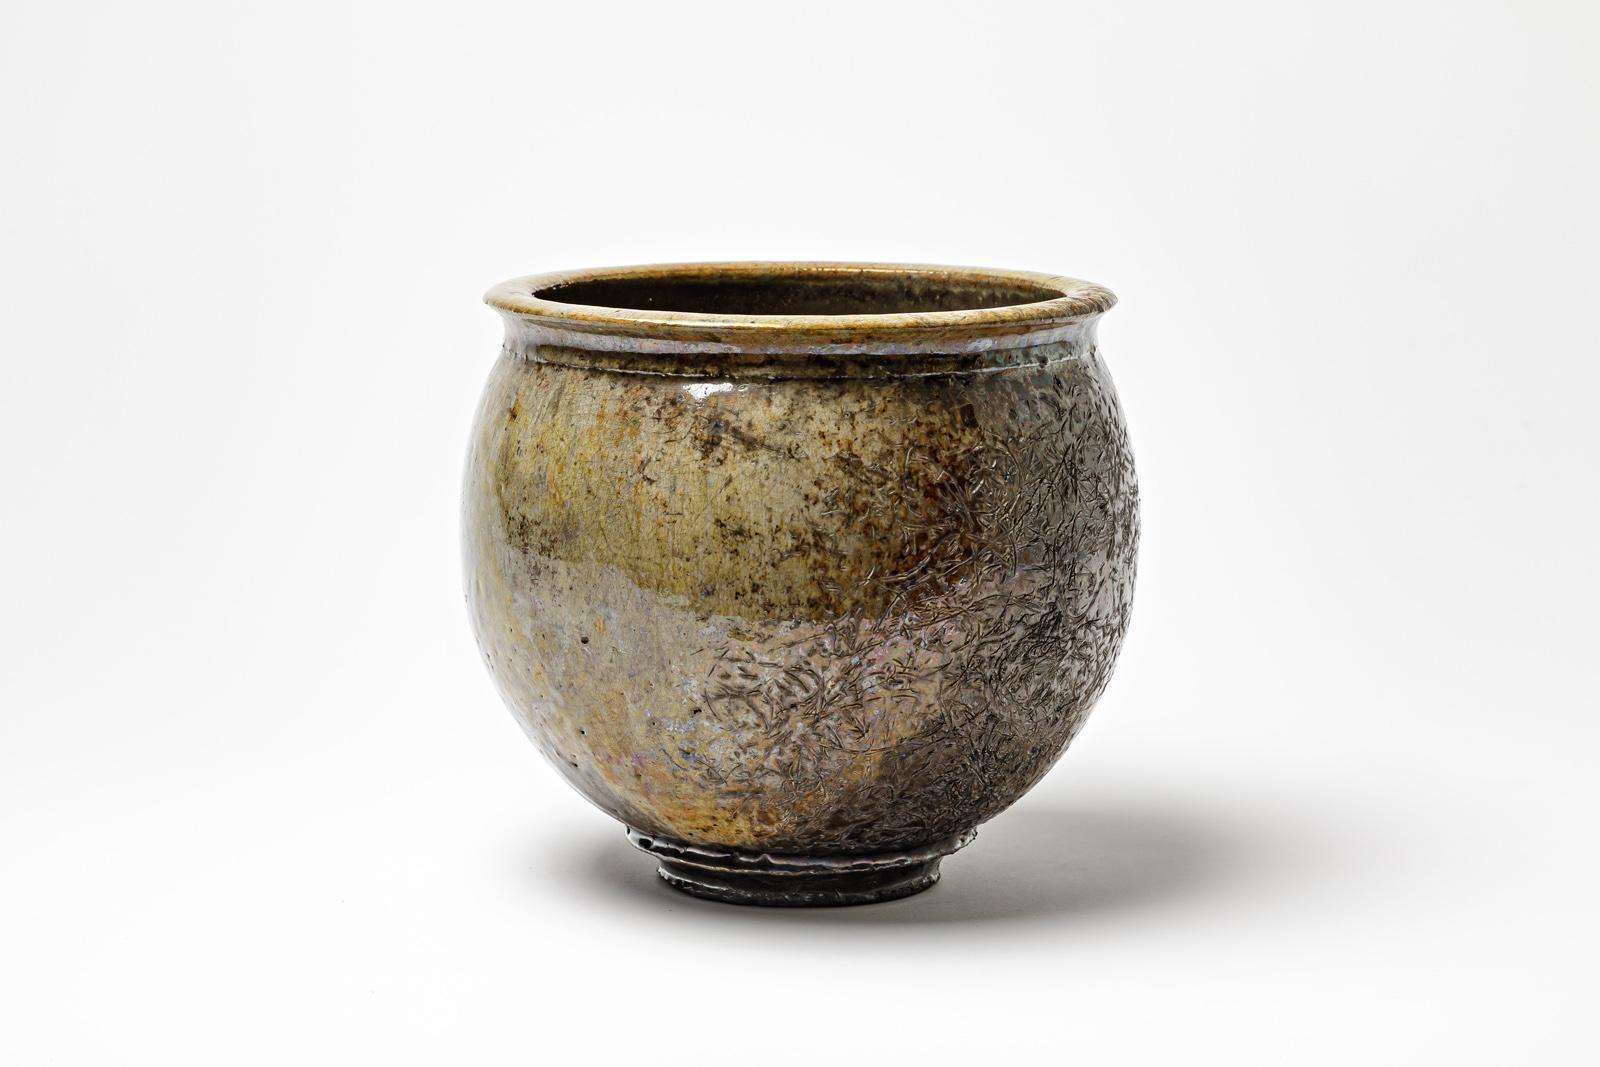 Brown glazed ceramic bowl with metallic highlights by Gisèle Buthod Garçon. Raku fired. Artist monogram under the base. Circa 1980-1990.
H : 7.9’ x 8.3’ inches.